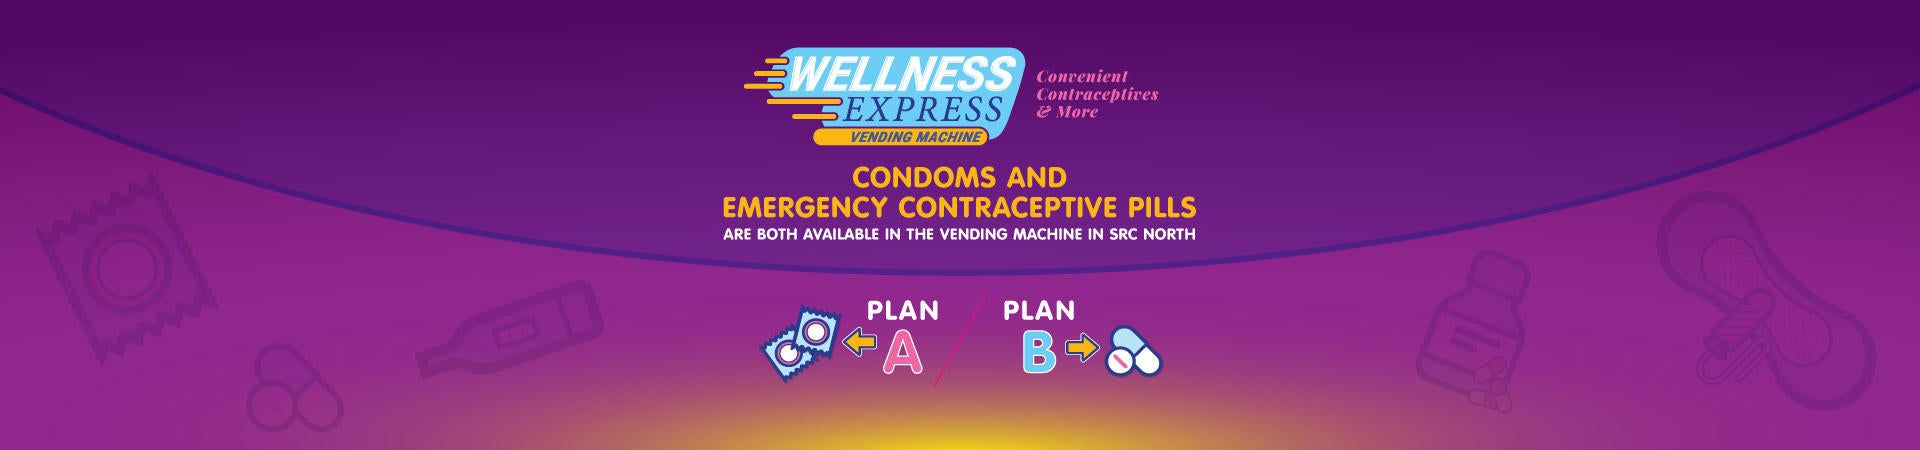 Wellness Express Vending Machine, Convenient Contraceptives & More